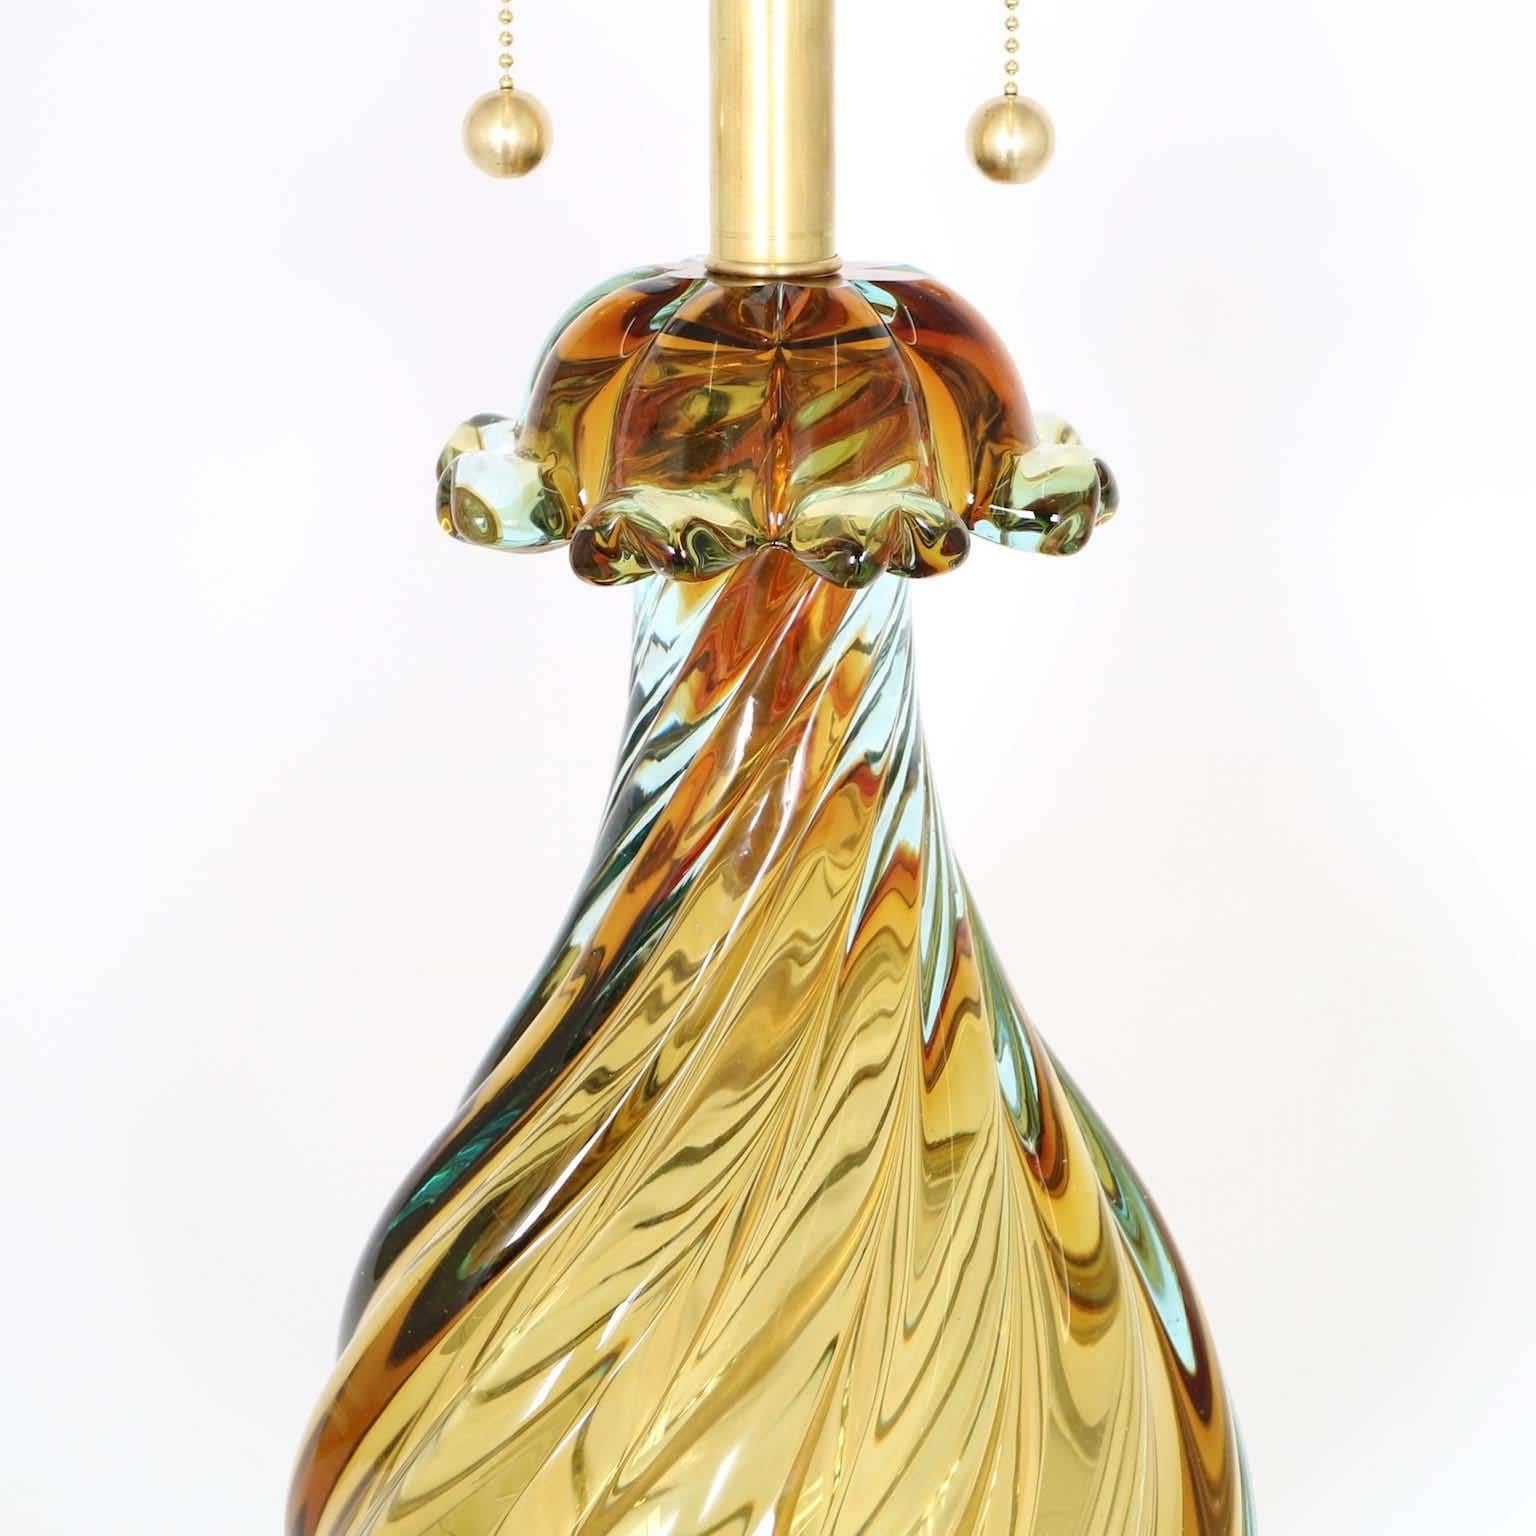 Hollywood Regency Marbro Lamp in Murano Glass by Seguso 1